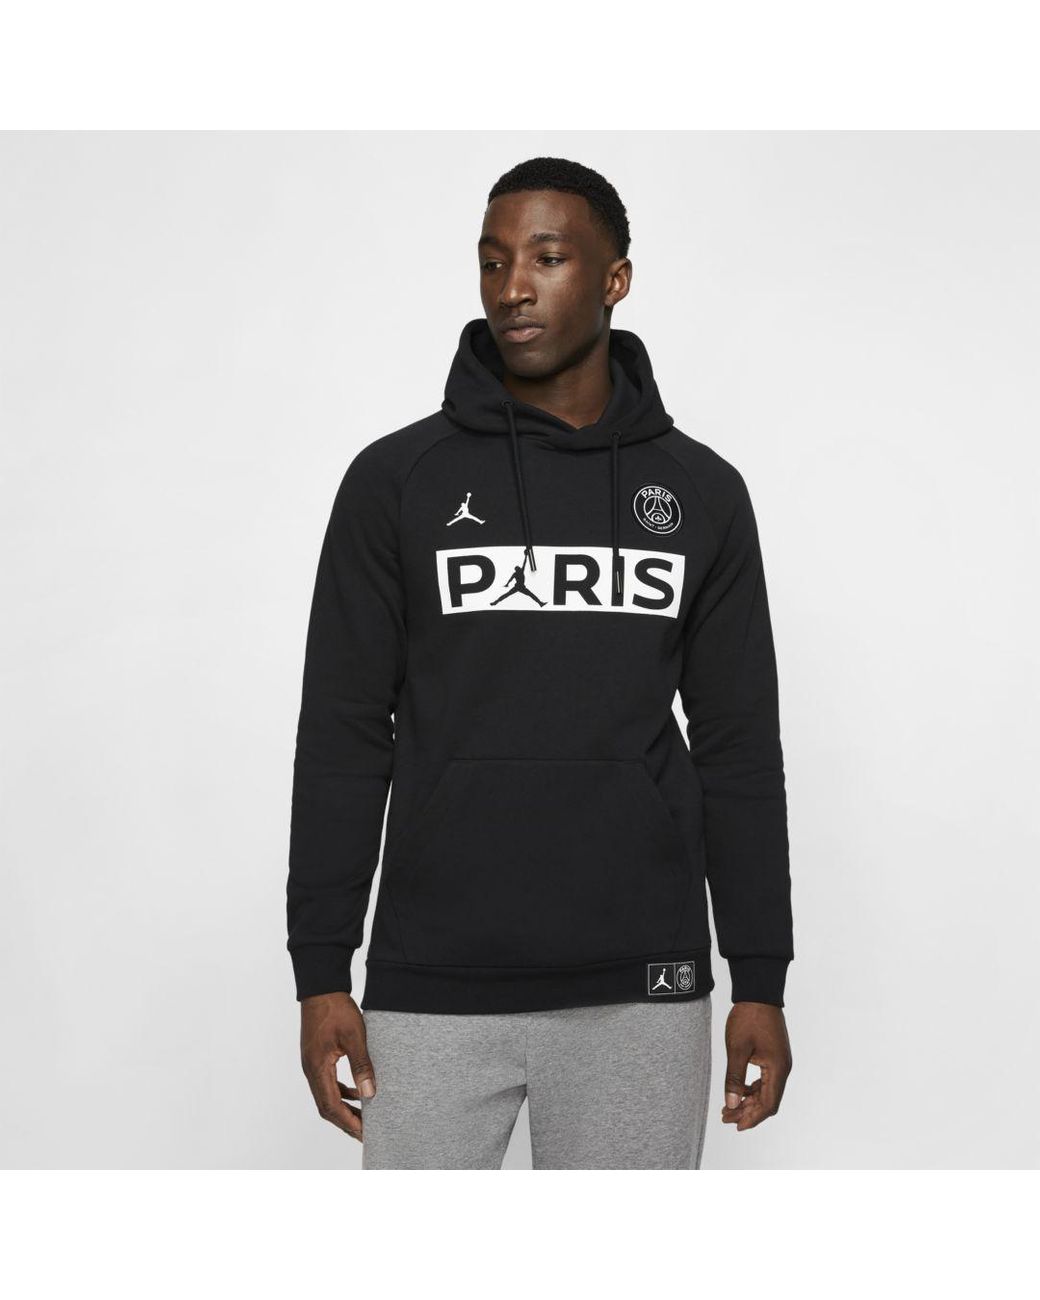 at opfinde Autonomi Finde på Nike Jordan Paris Saint-germain Fleece Pullover Hoodie in Black for Men |  Lyst